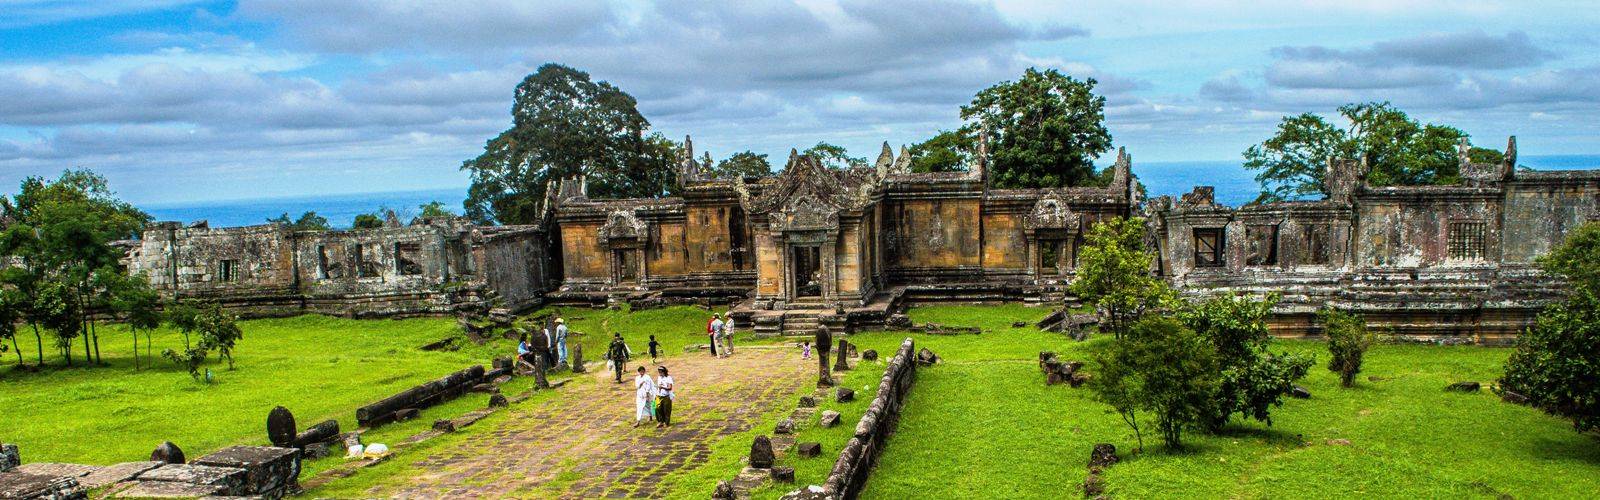 Храм преа вихеар - preah vihear temple - abcdef.wiki